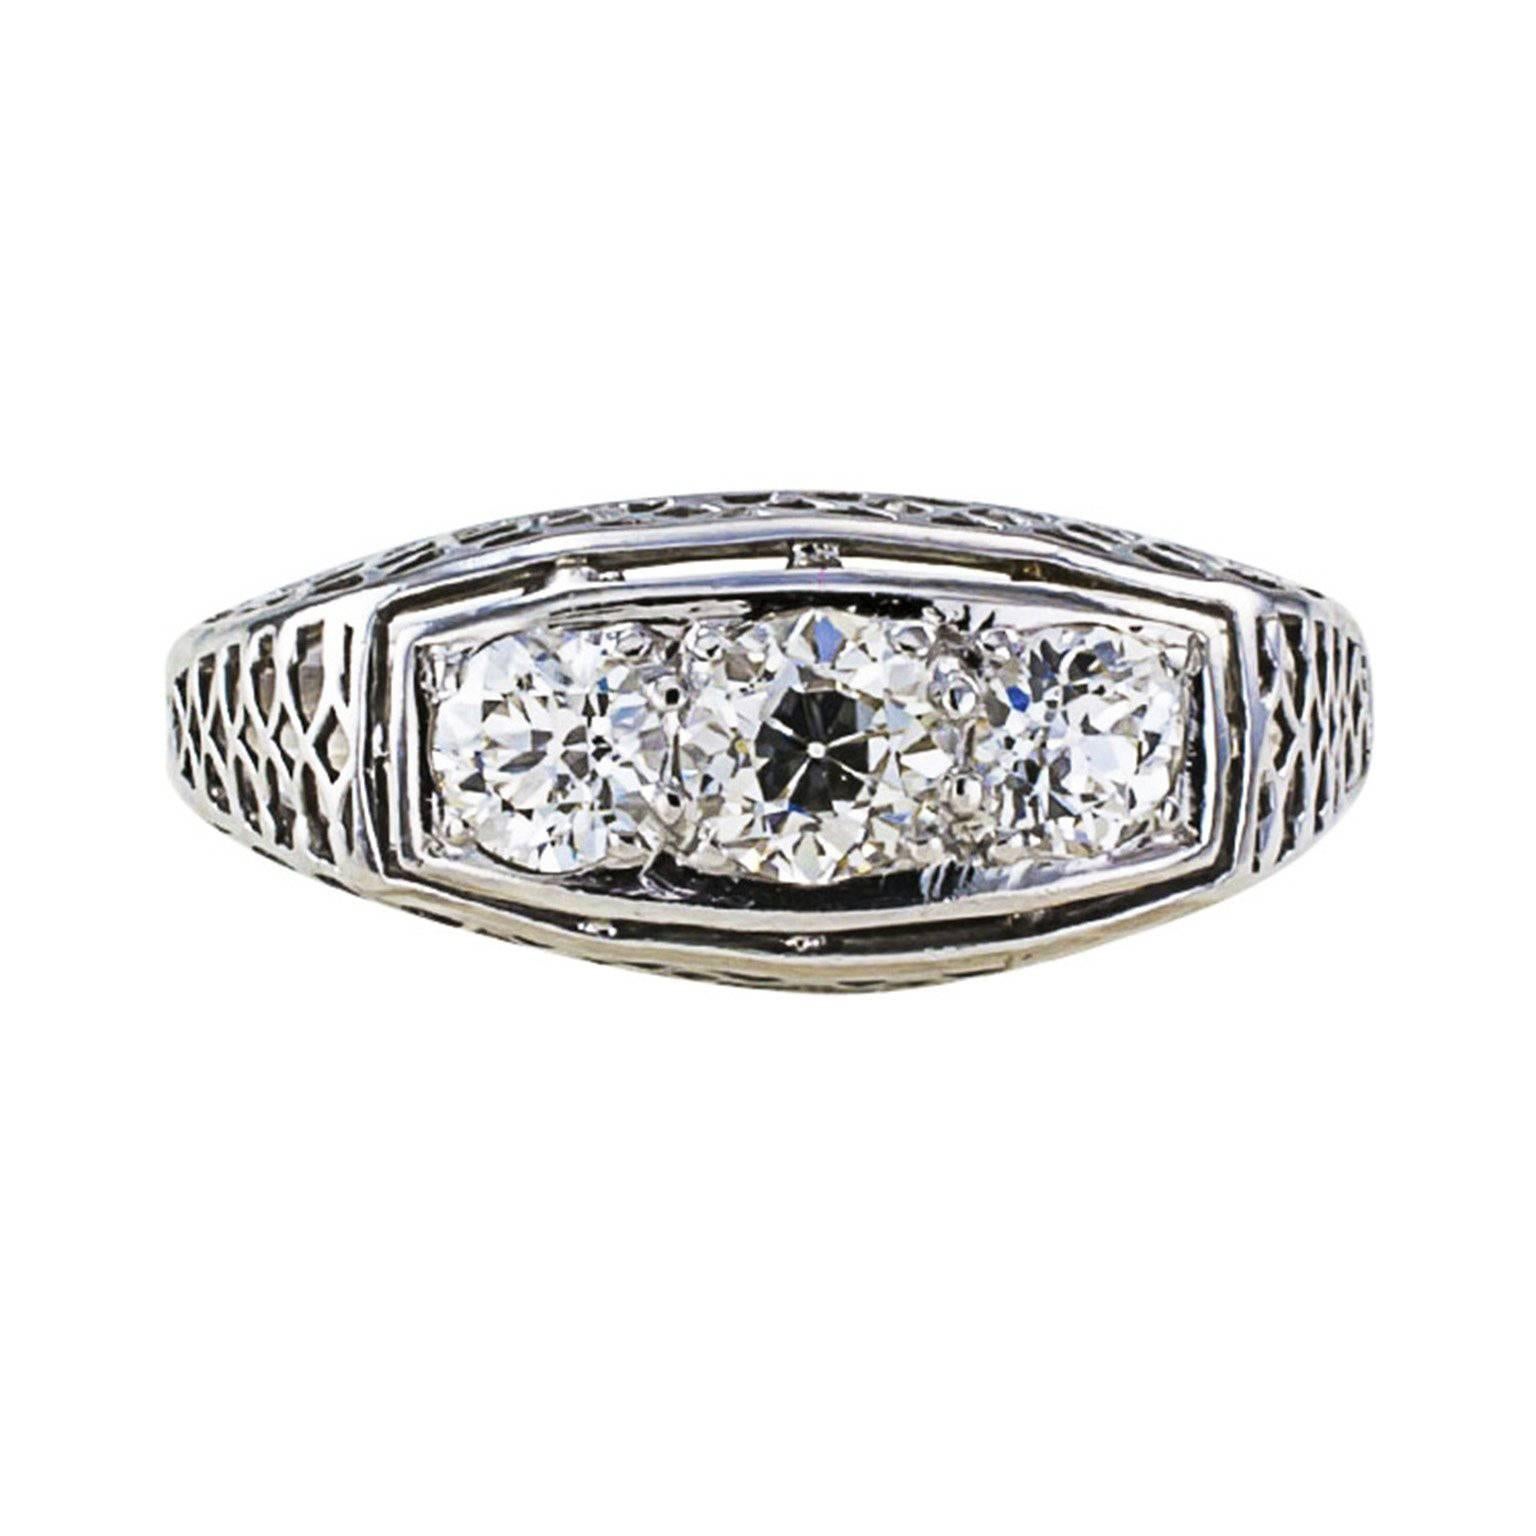 1920s 3 stone diamond ring